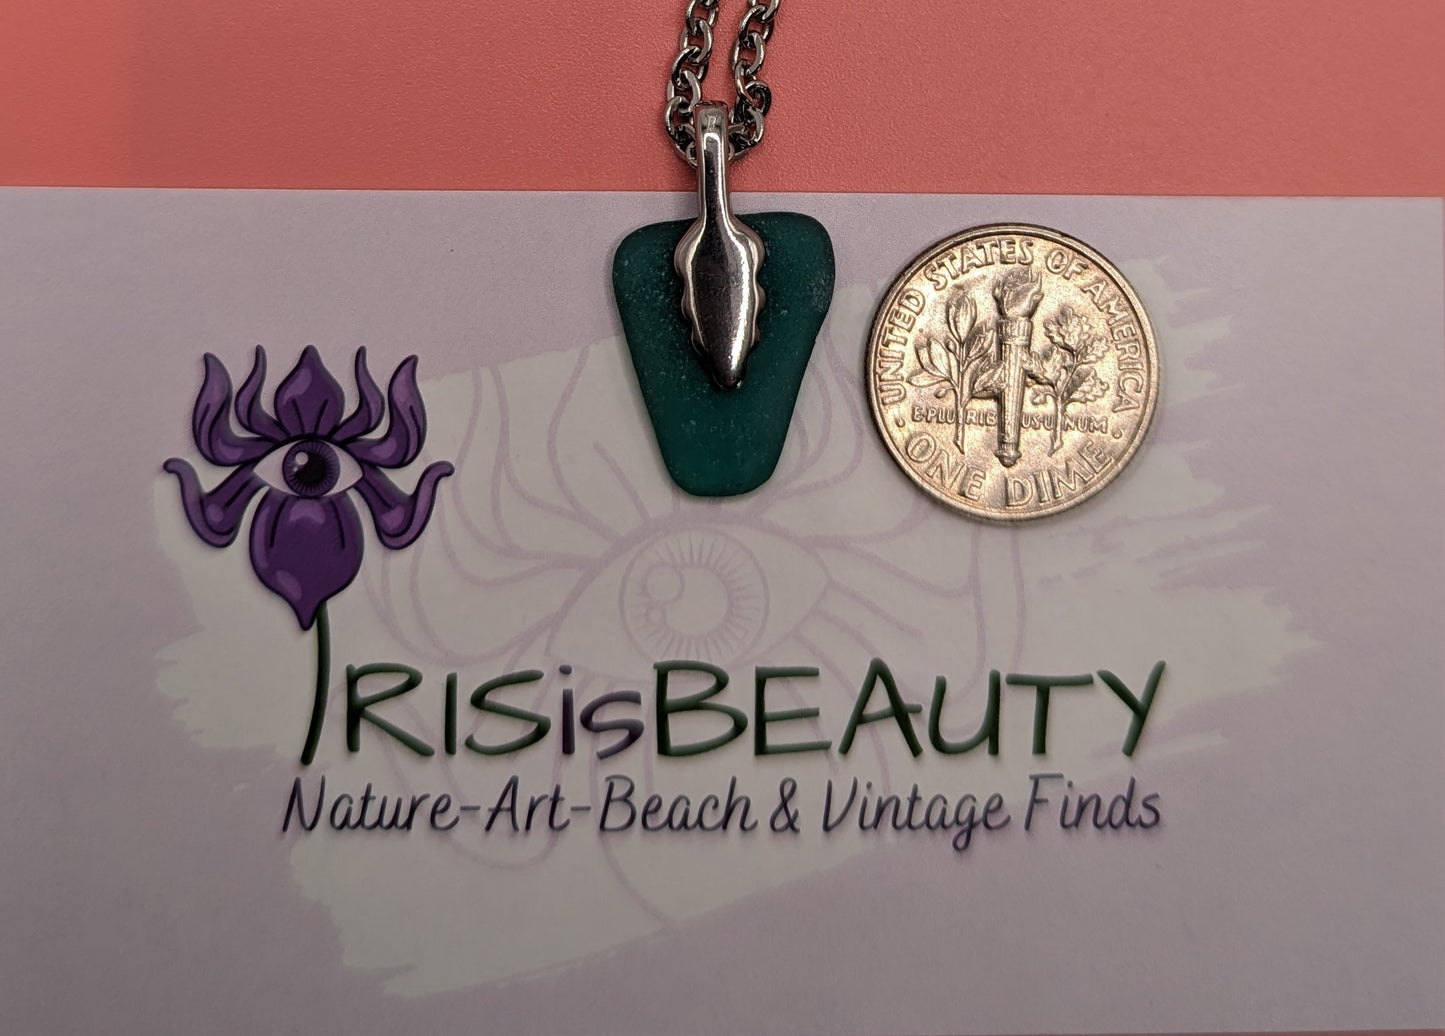 Teal Seaglass pendant, genuine seaglass, seaglass jewelry